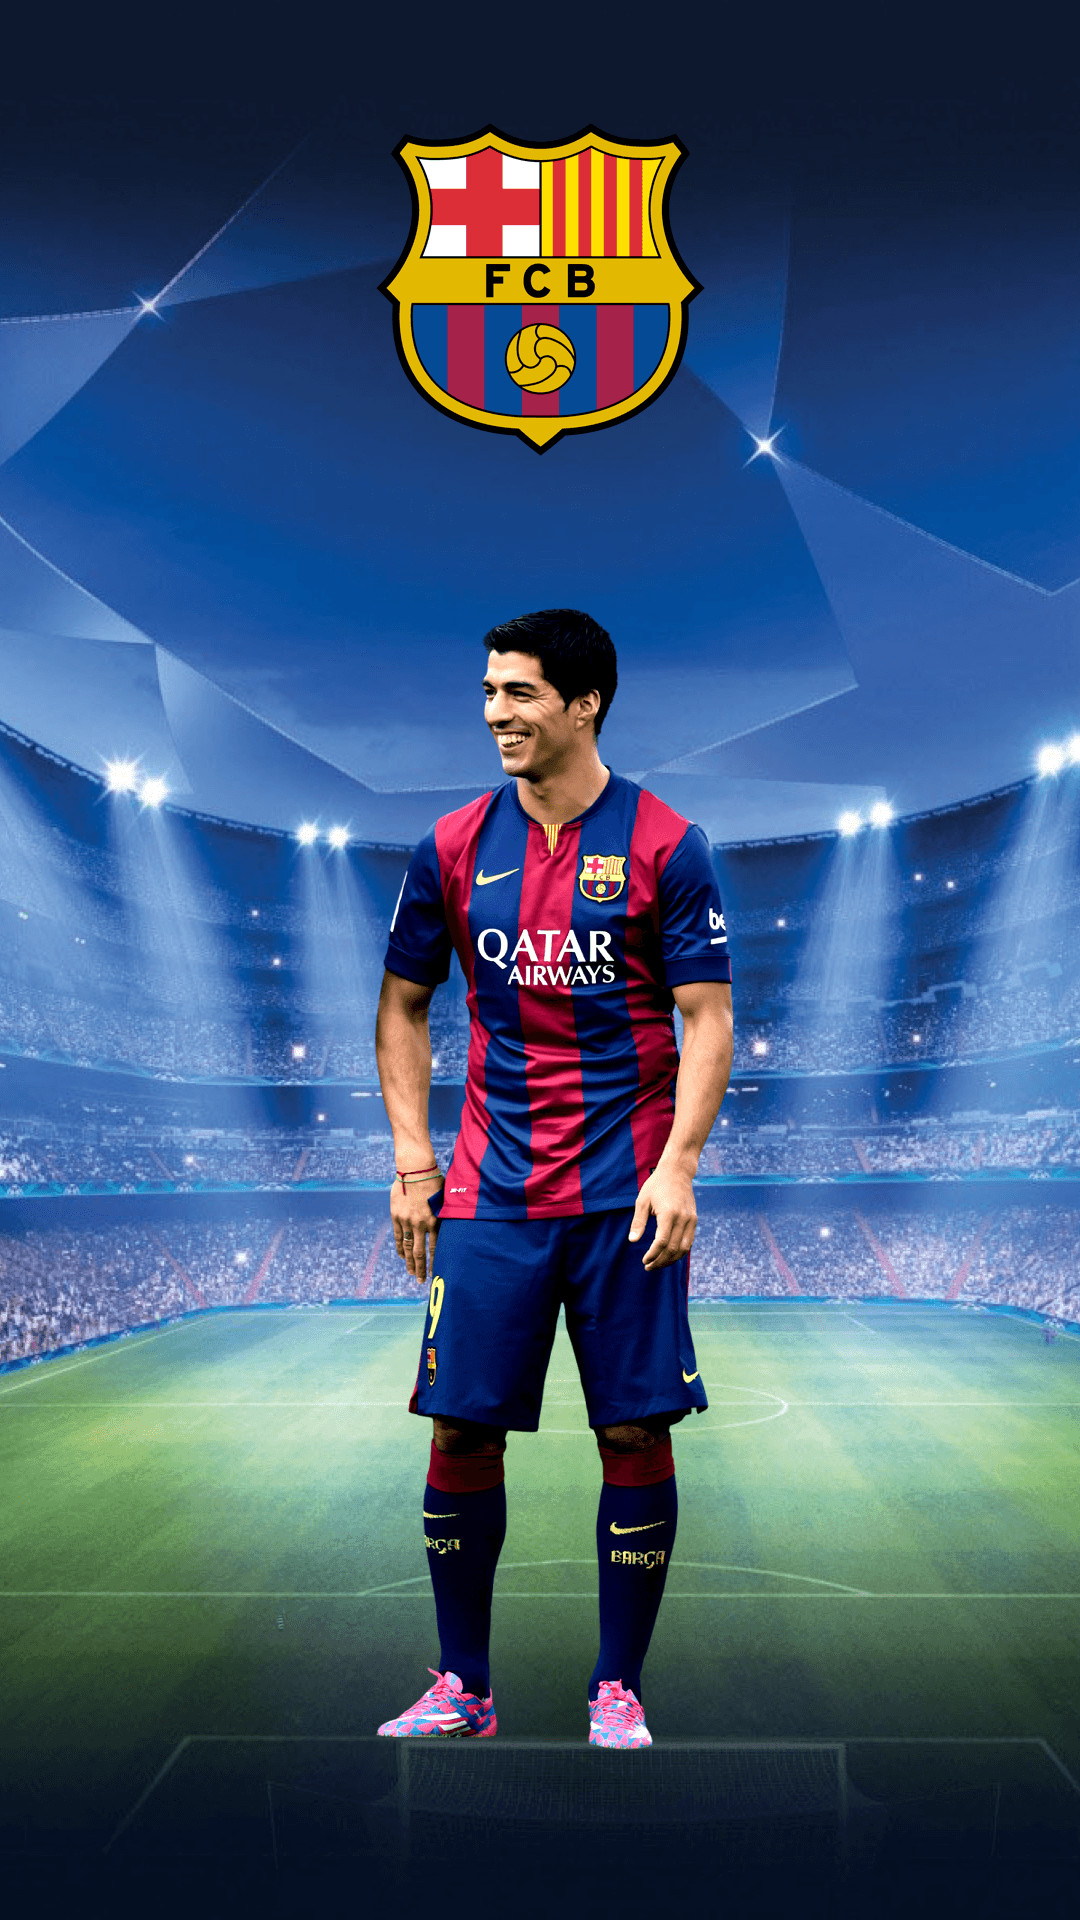 1080x1920 2016 Luis Suarez FC Barcelona iPhone Wallpaper - Wallpapers iPhone